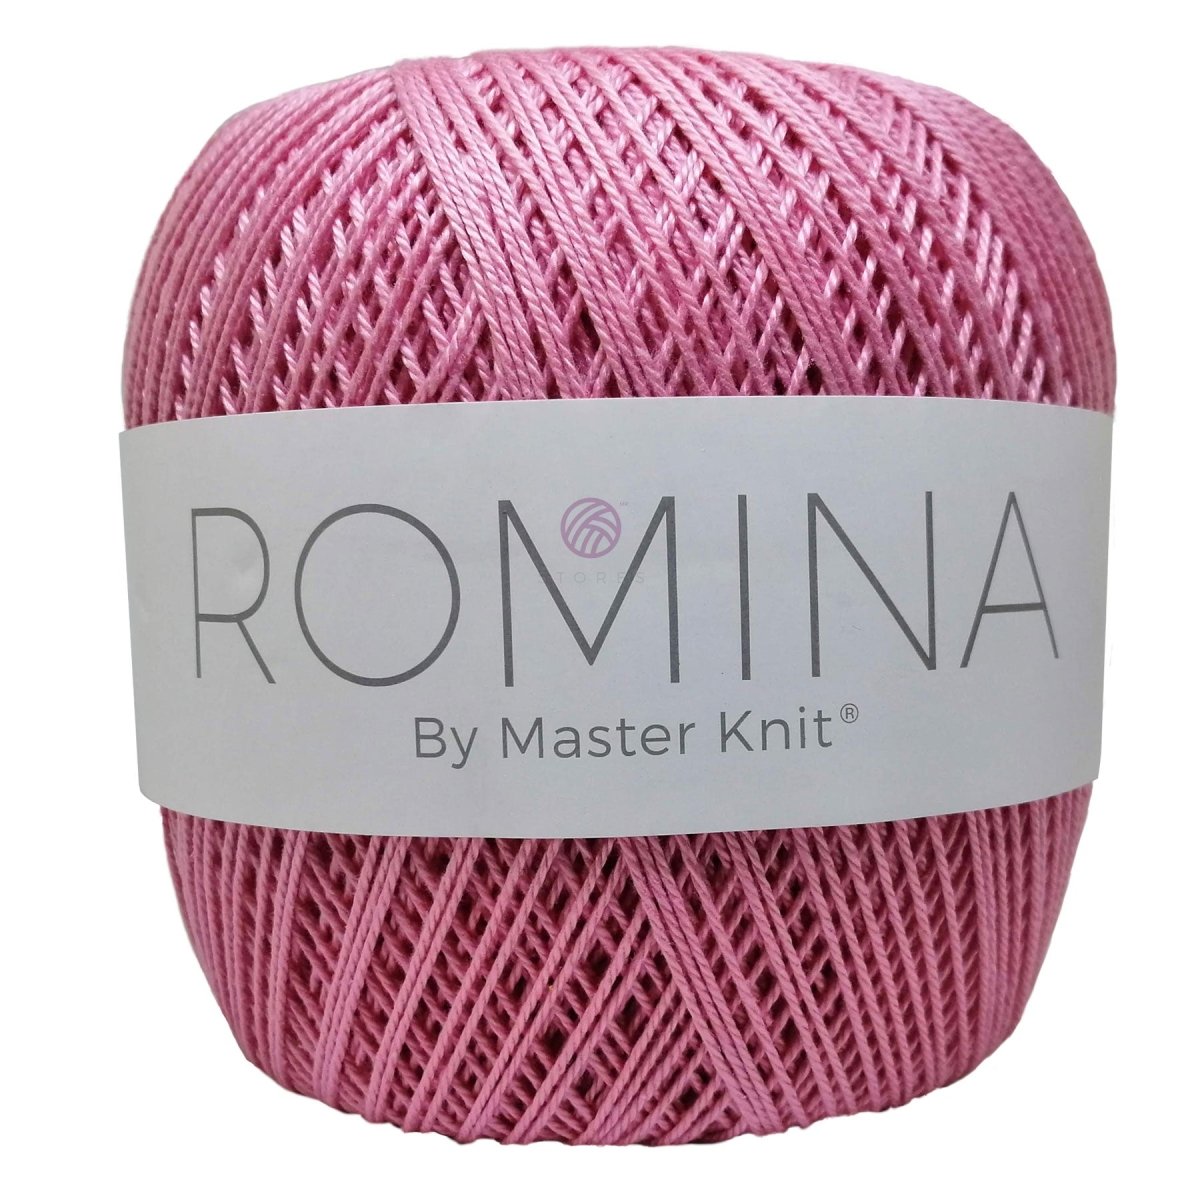 ROMINA - Crochetstores9335-581745051438685